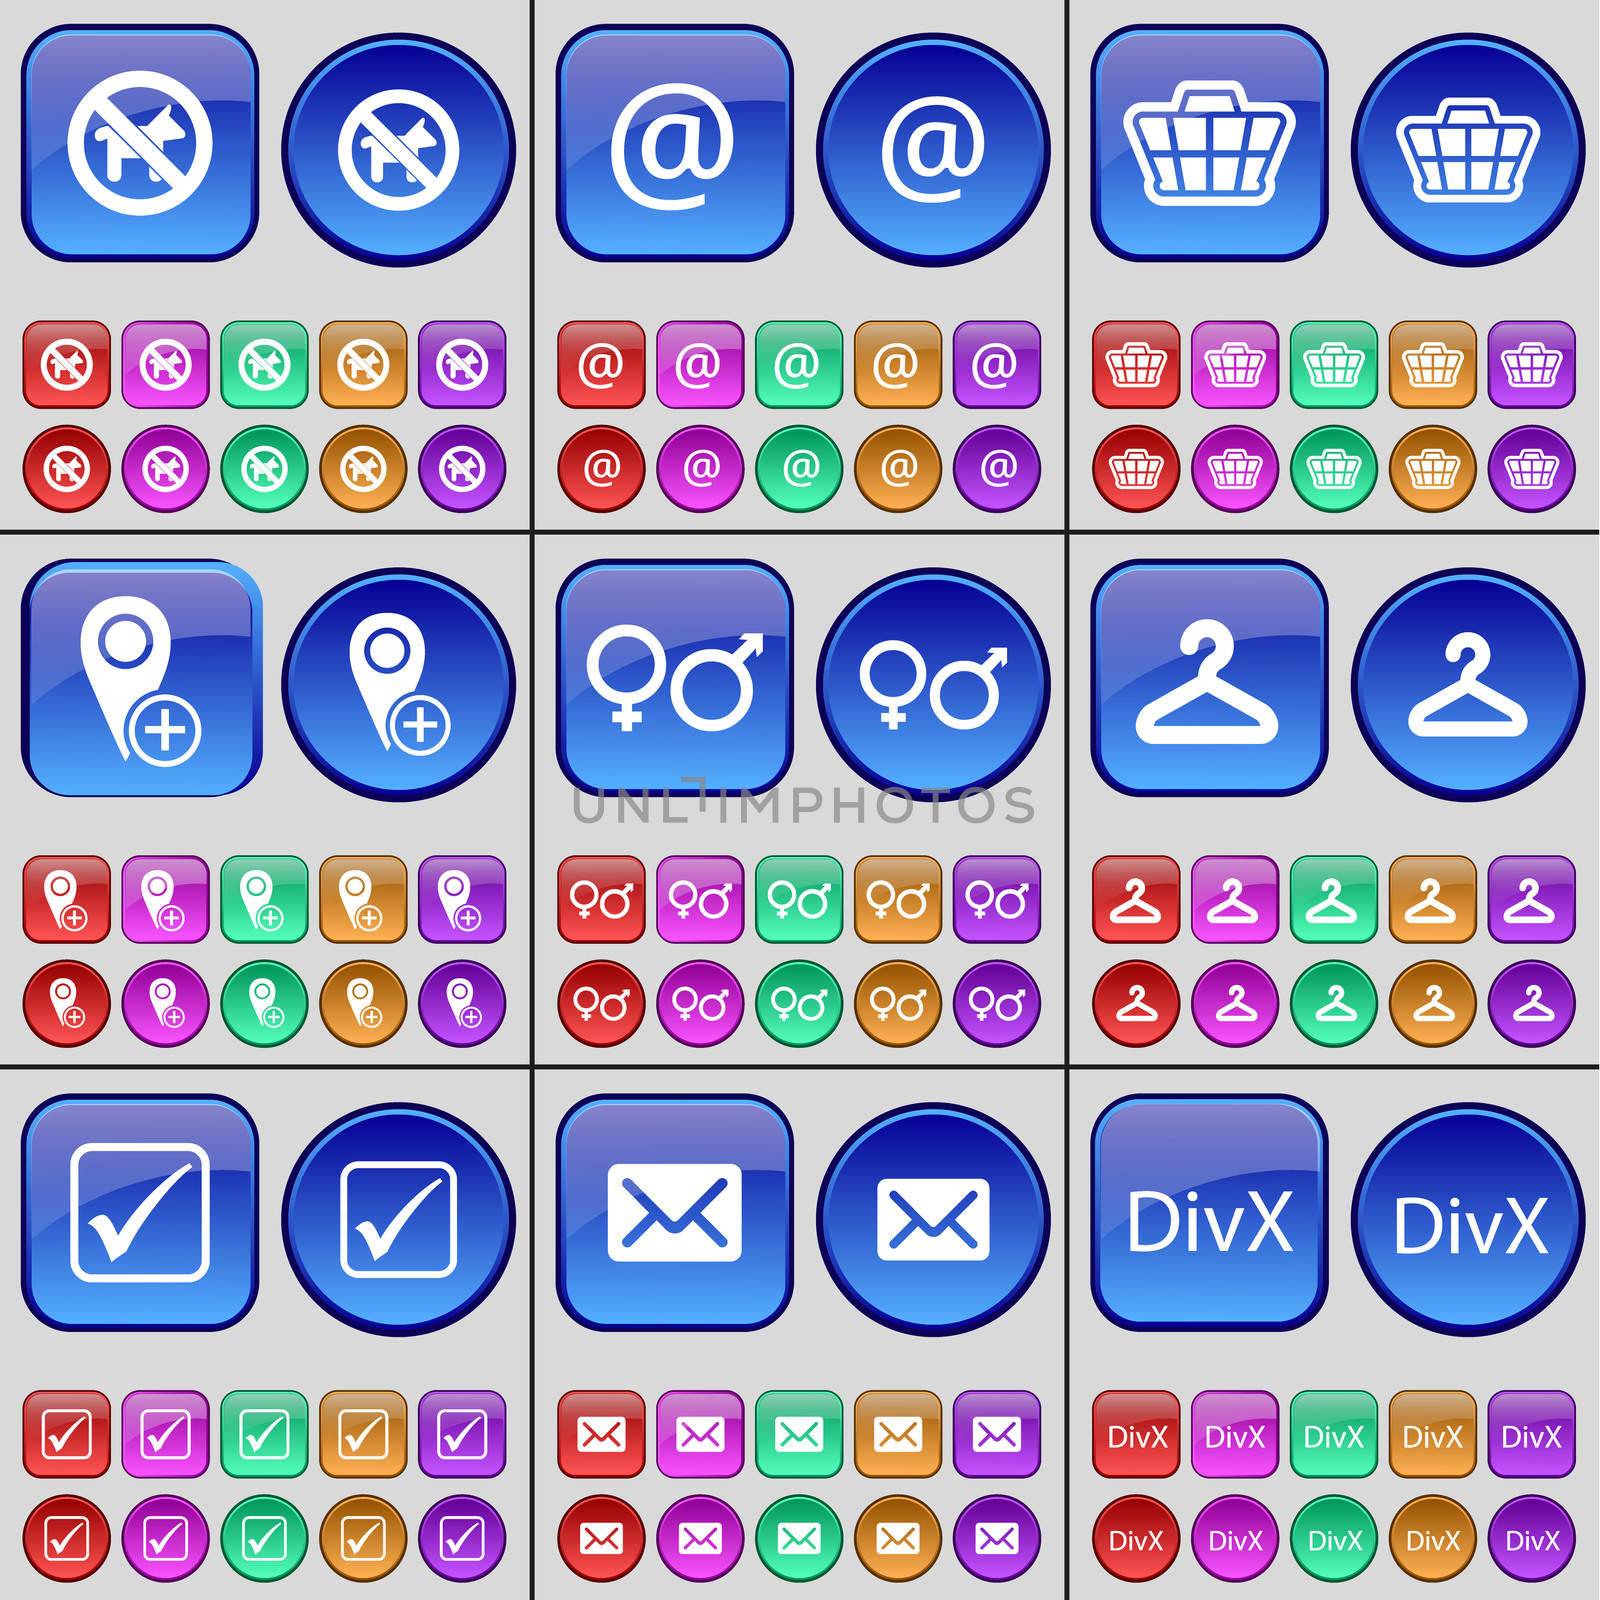 No pets allowed, Mail, Basket, Checkpoint, Gender symbols, Hanger, Tick, Message, DivX. A large set of multi-colored buttons.  by serhii_lohvyniuk